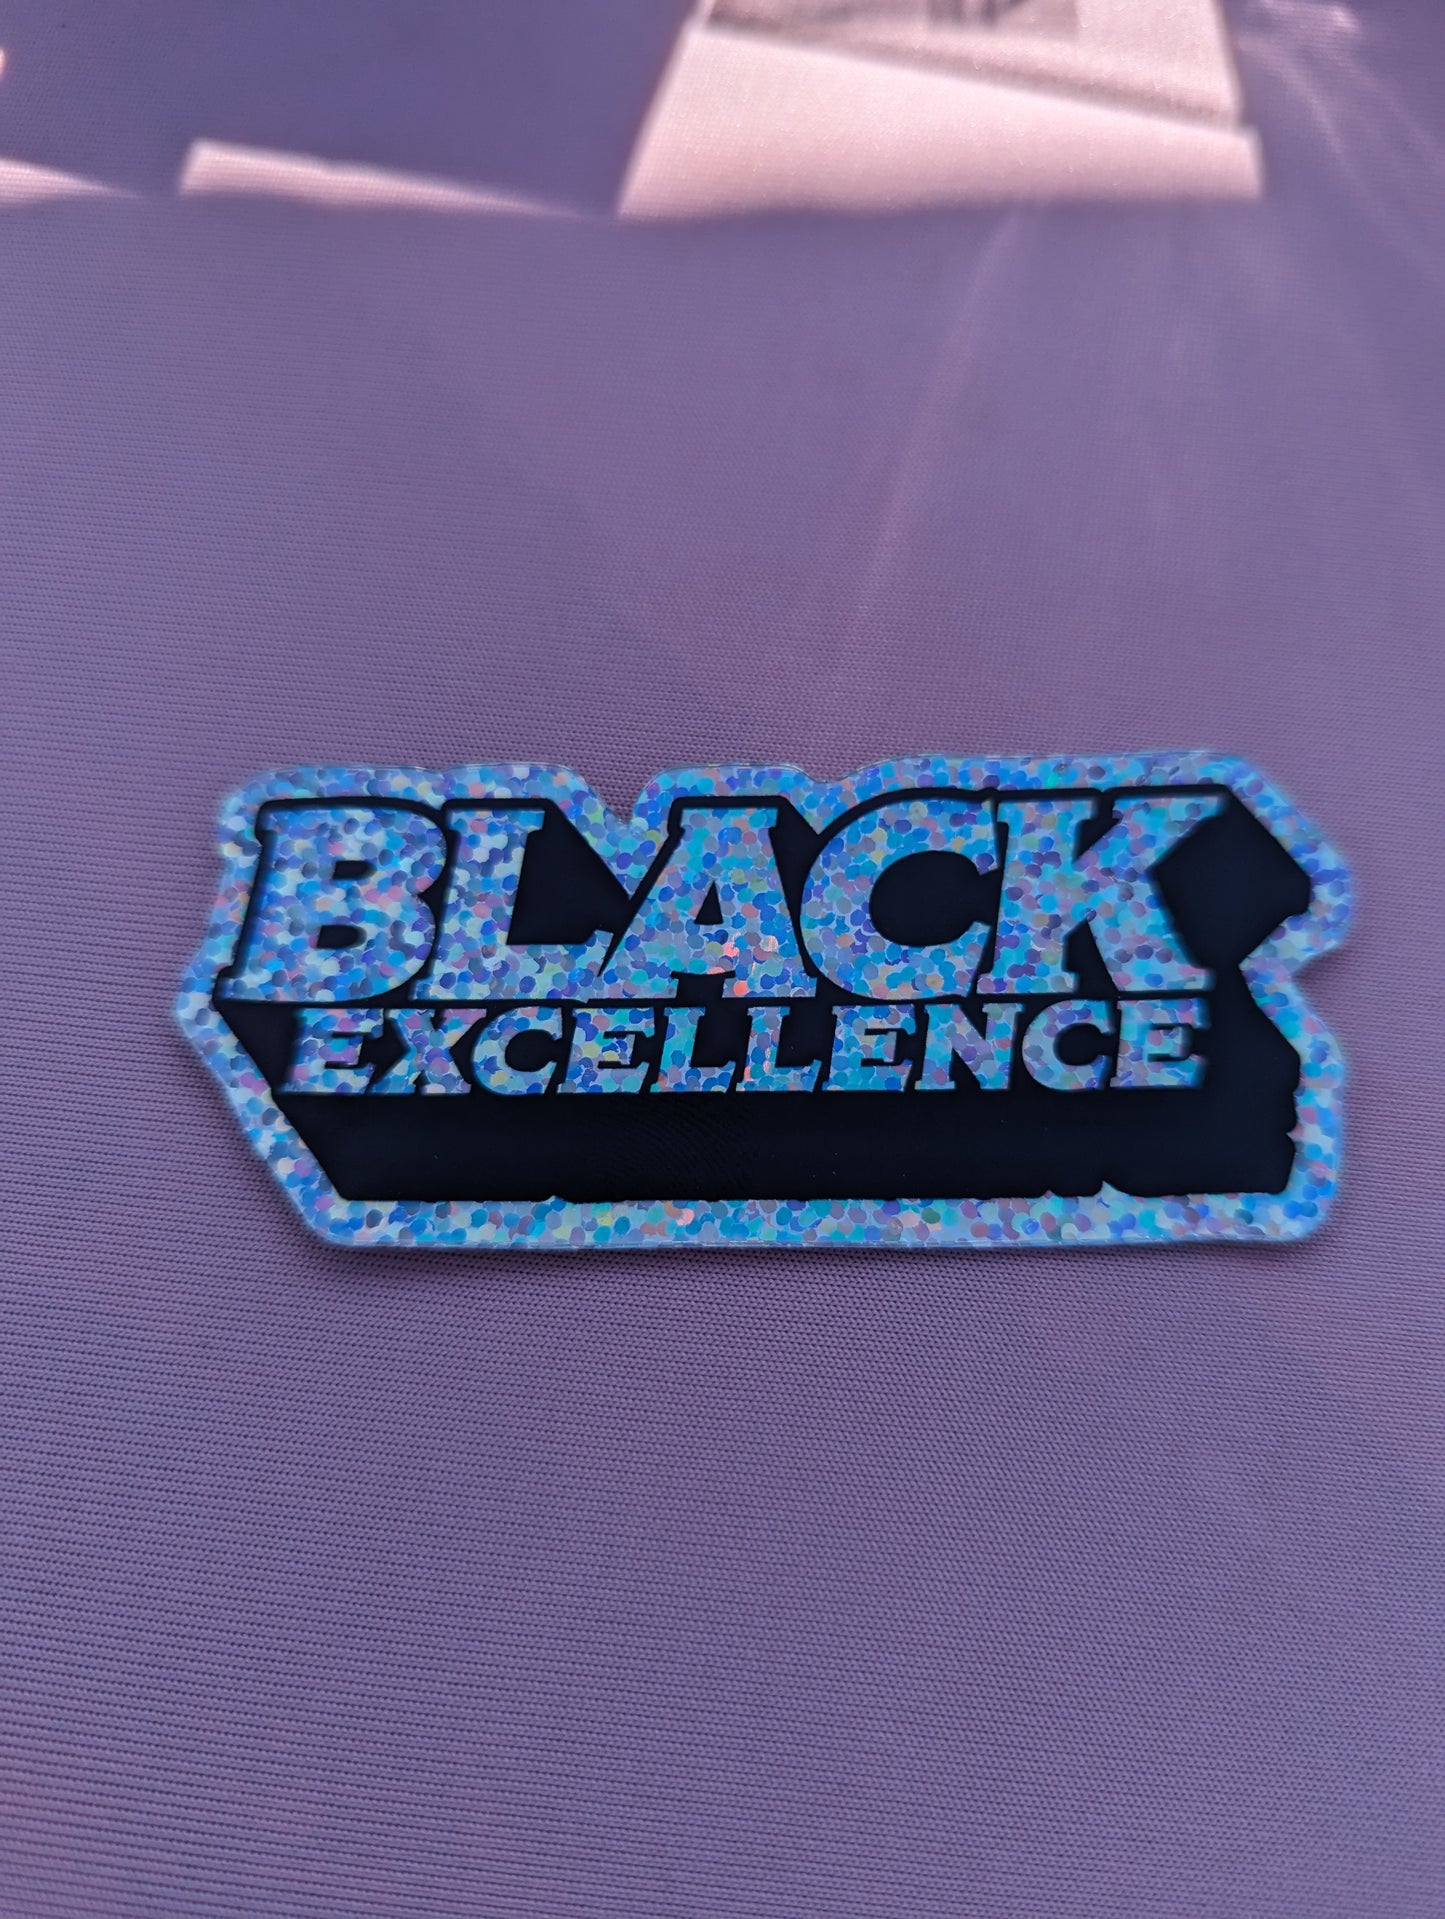 Black excellence sticker